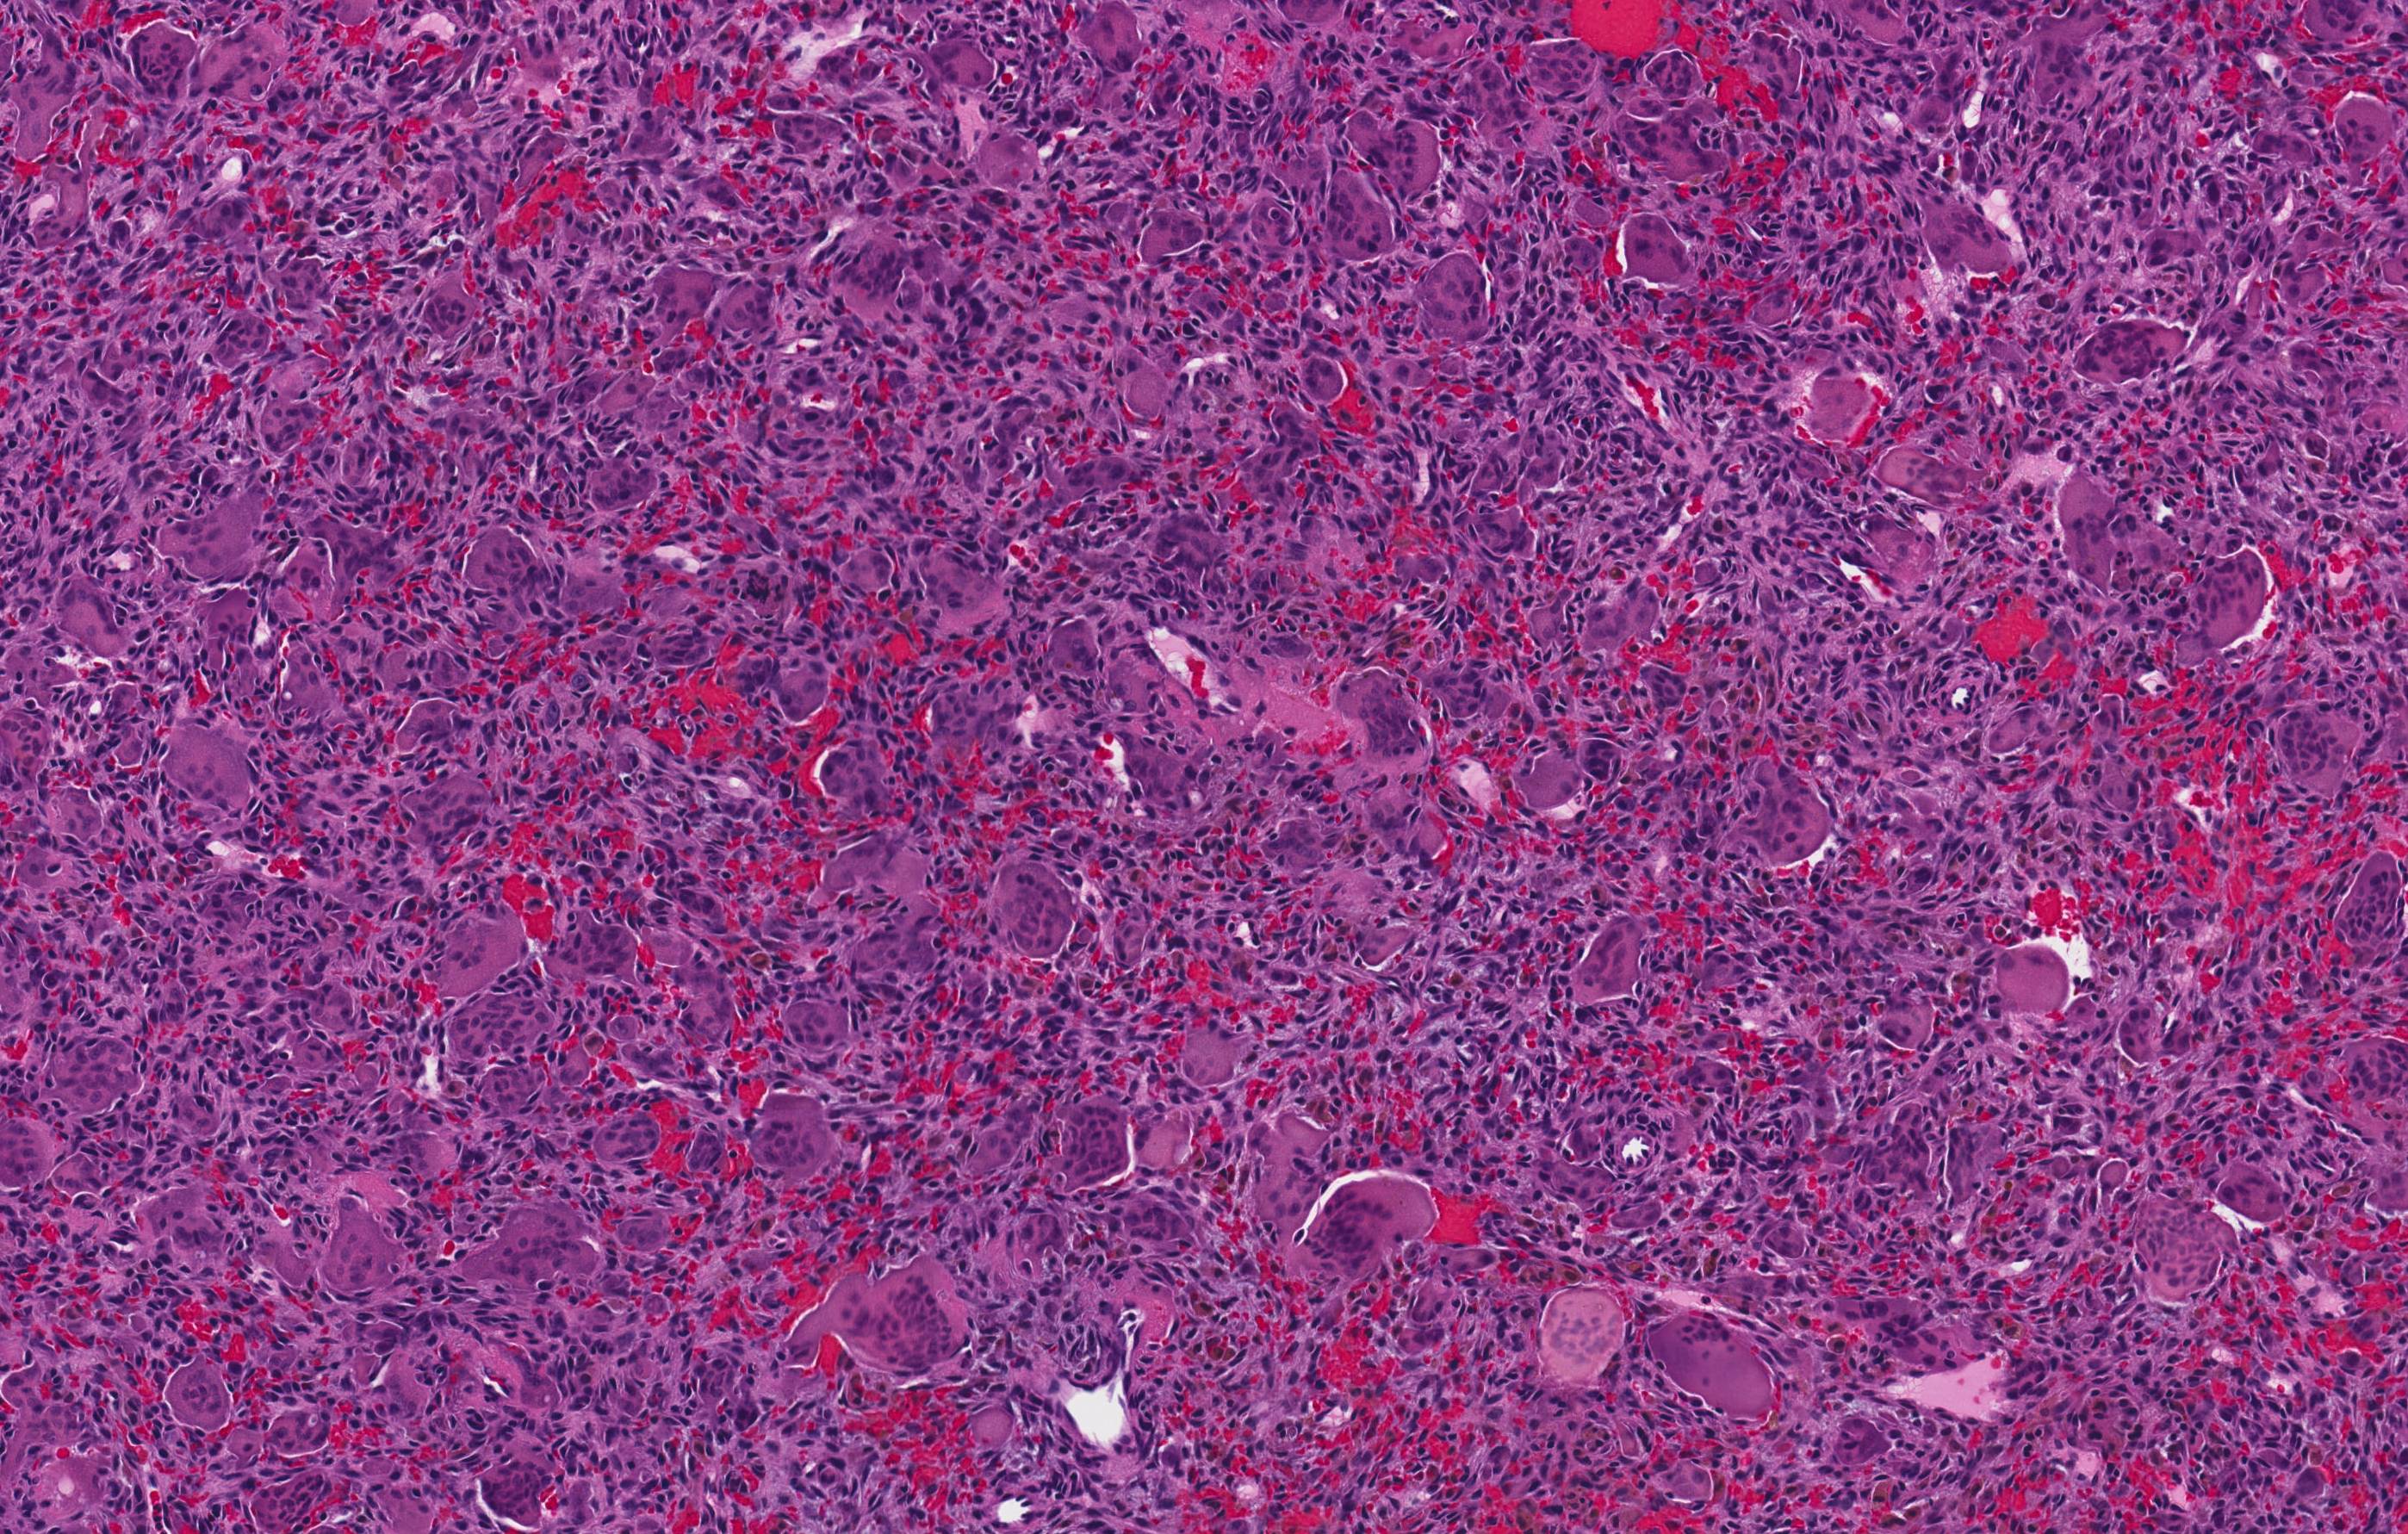 Central giant cell granuloma